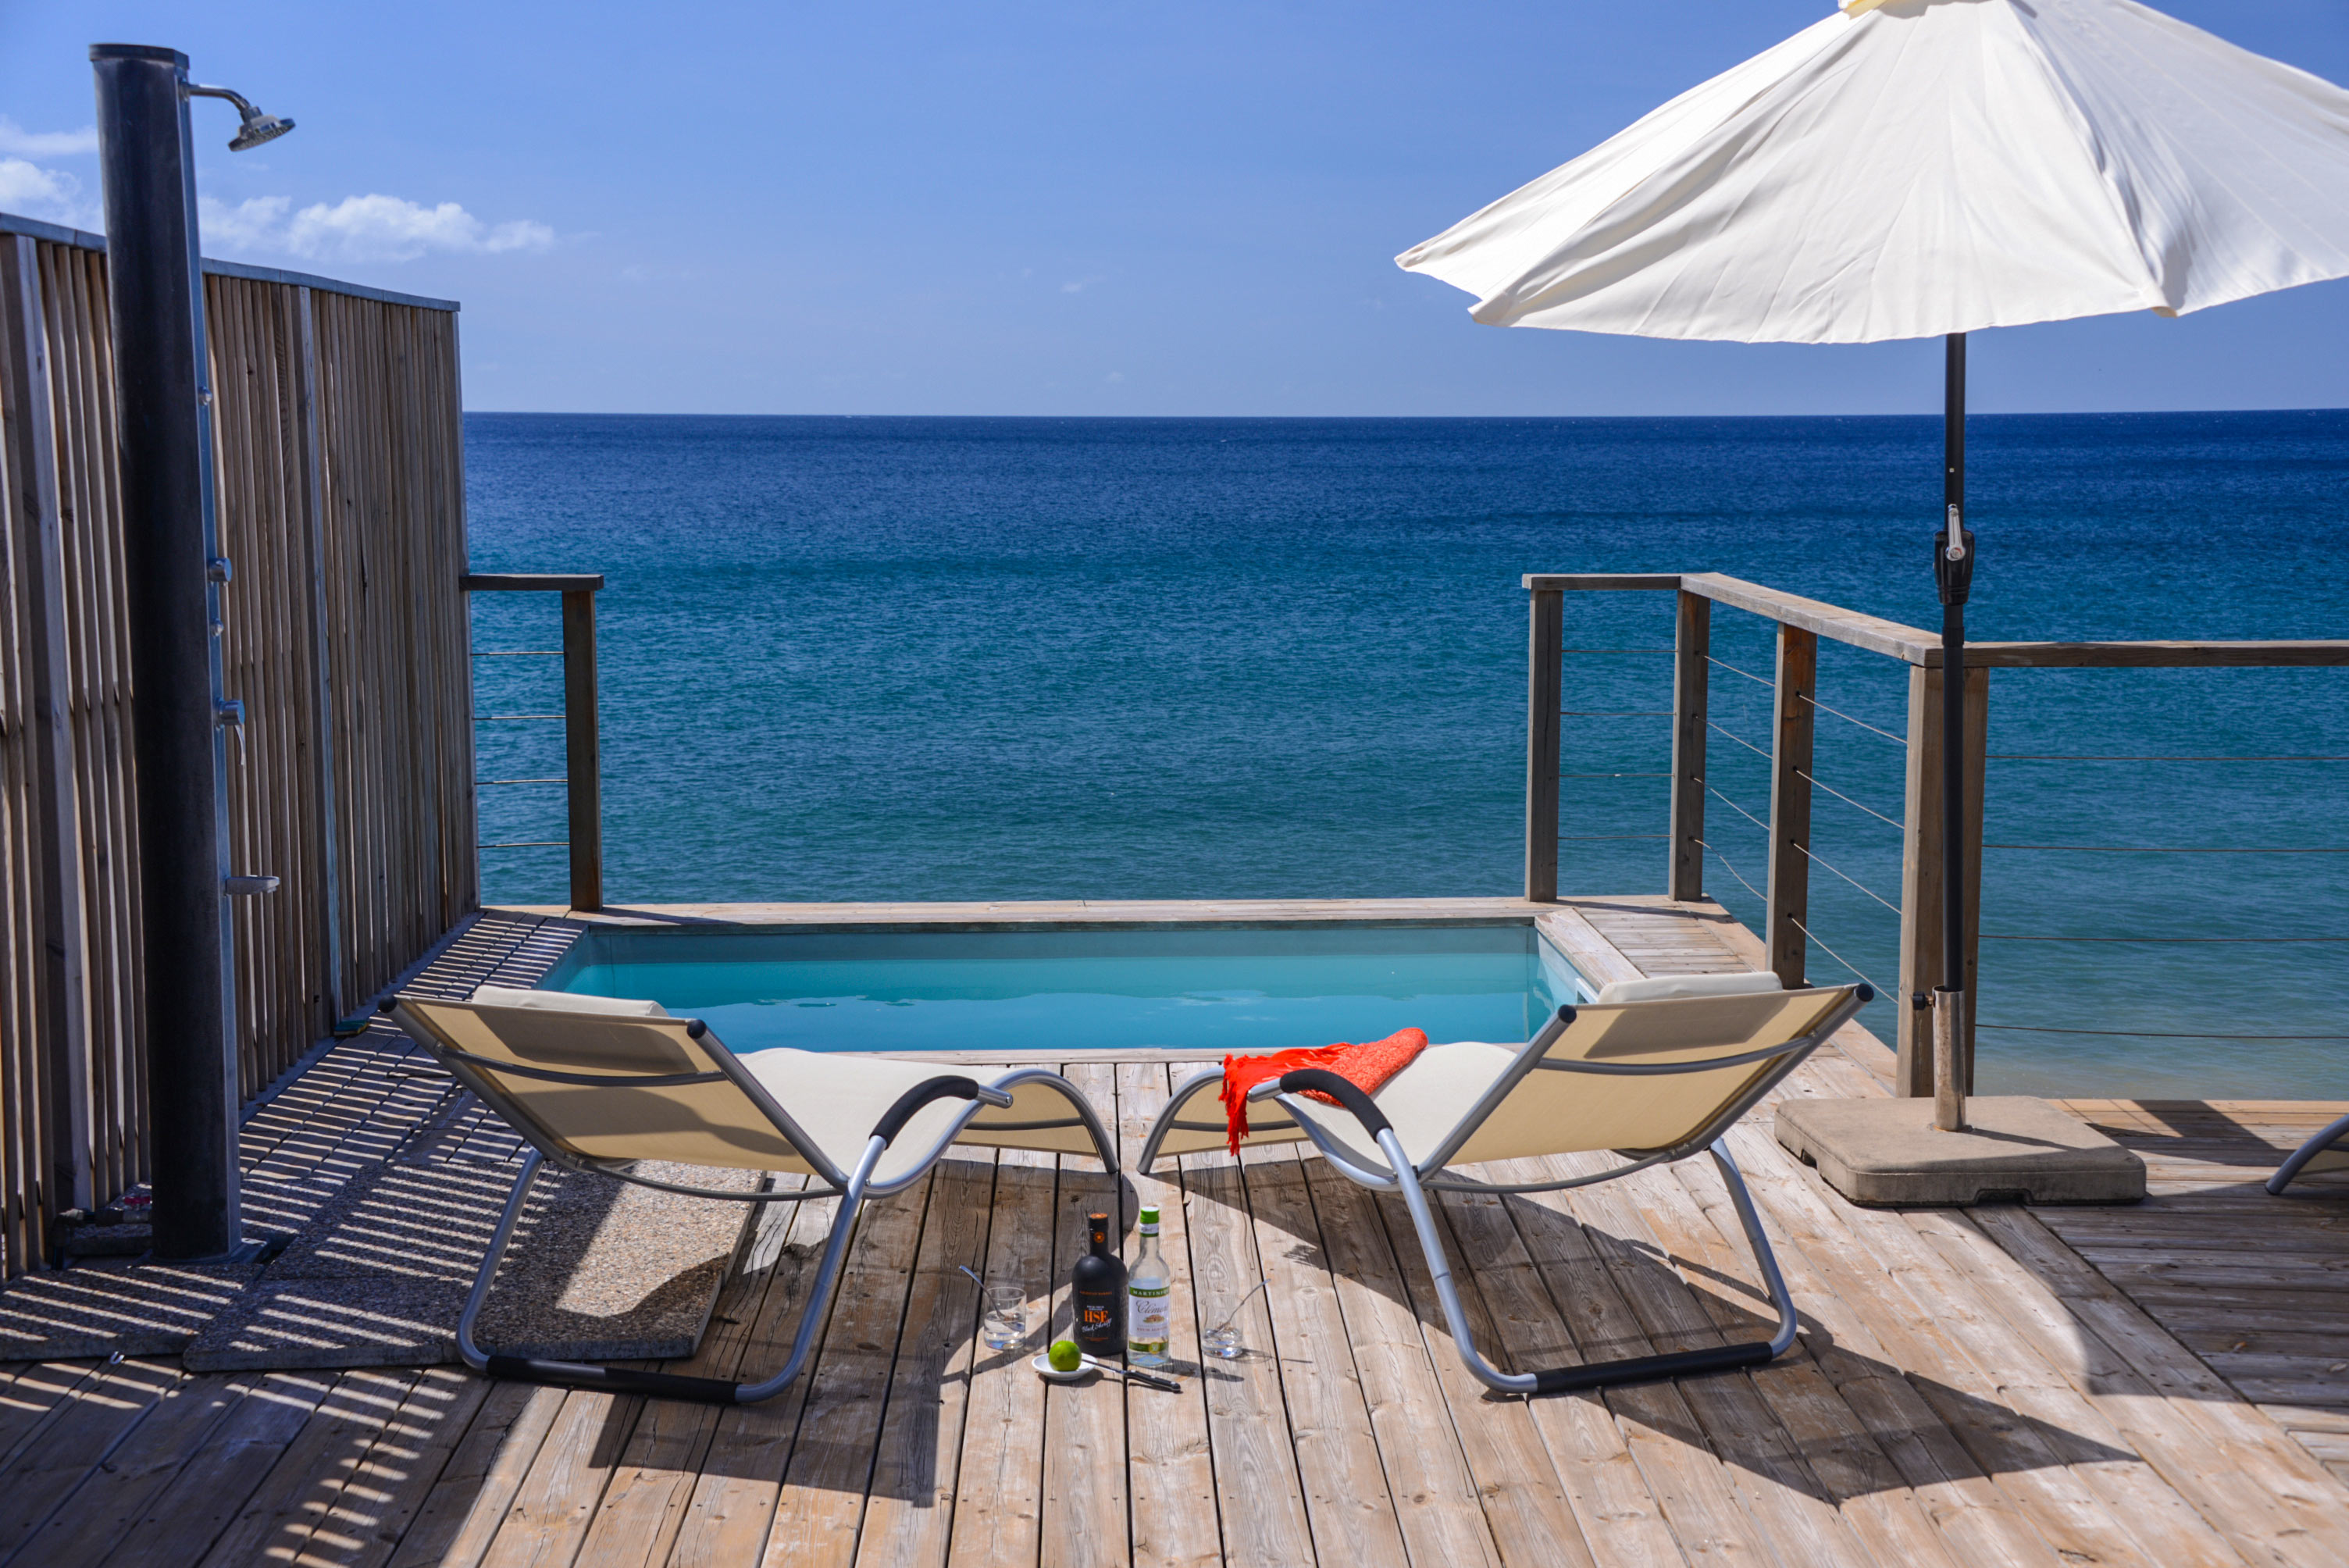 Villa EVE location Martinique Nord Caraïbe bord de mer piscine le Carbet - Bienvenue à la villa Eve